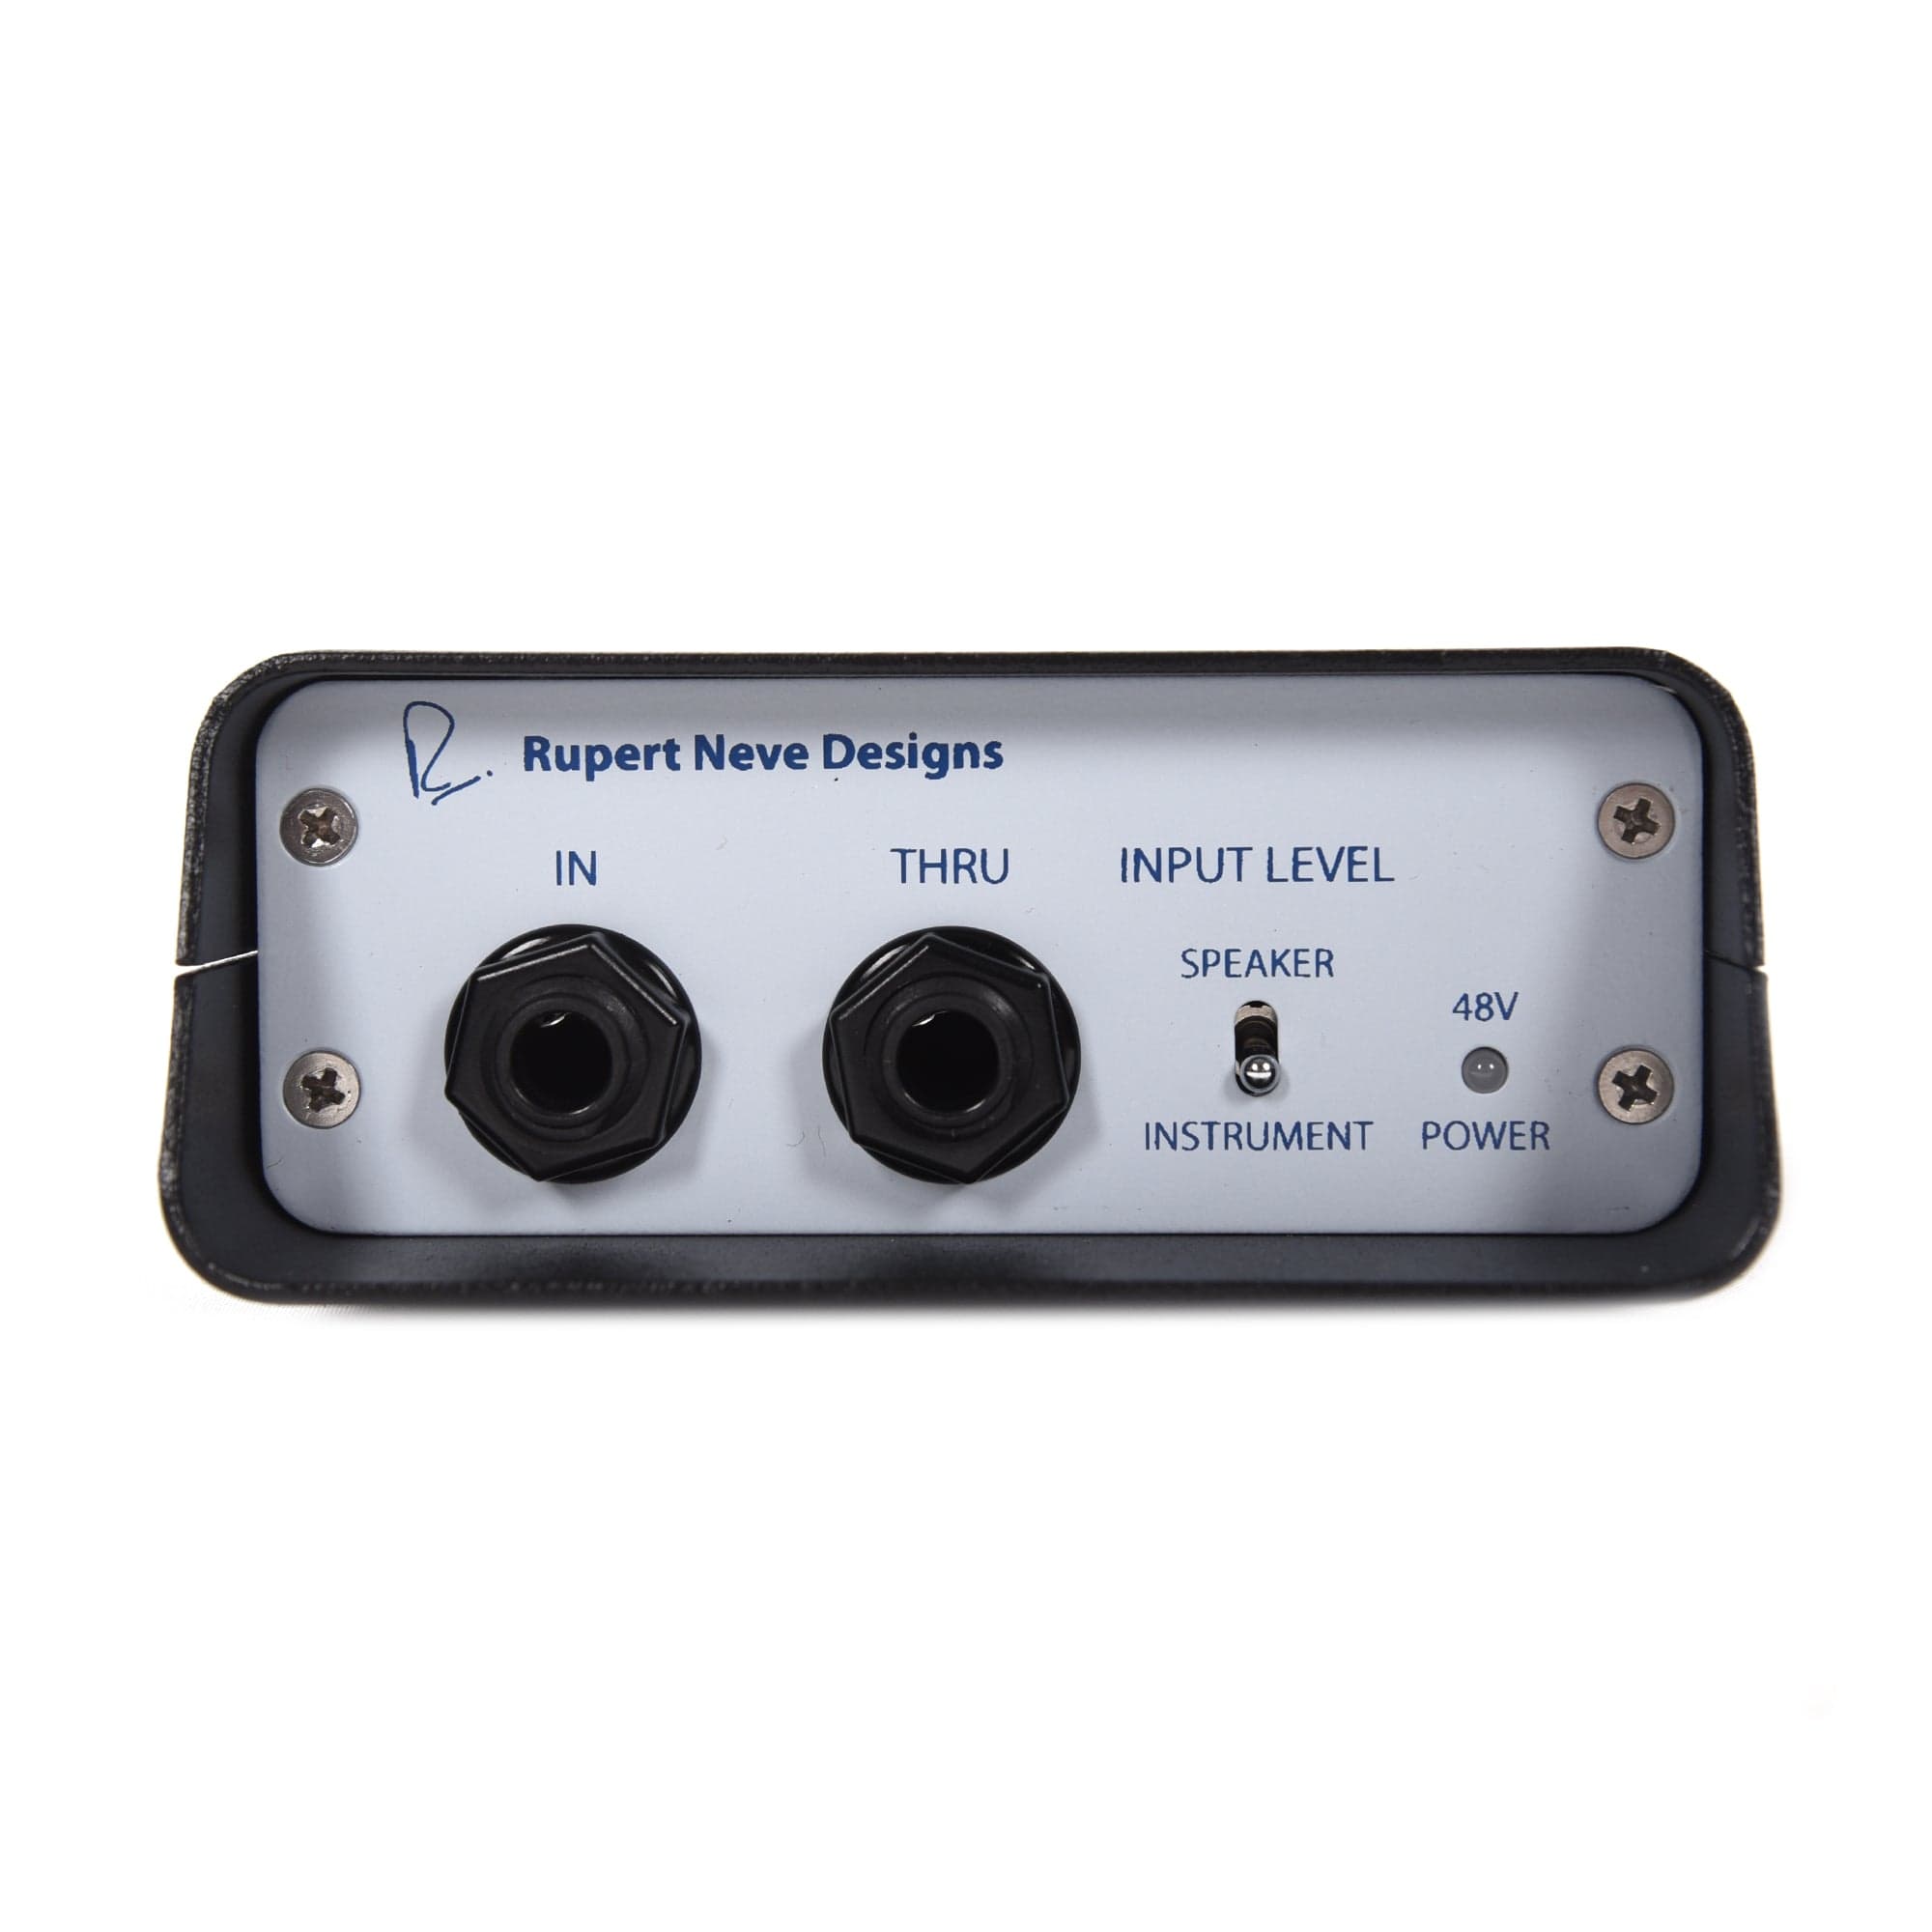 Rupert Neve Designs RNDI Active Transformer Direct Interface Pro Audio / DI Boxes